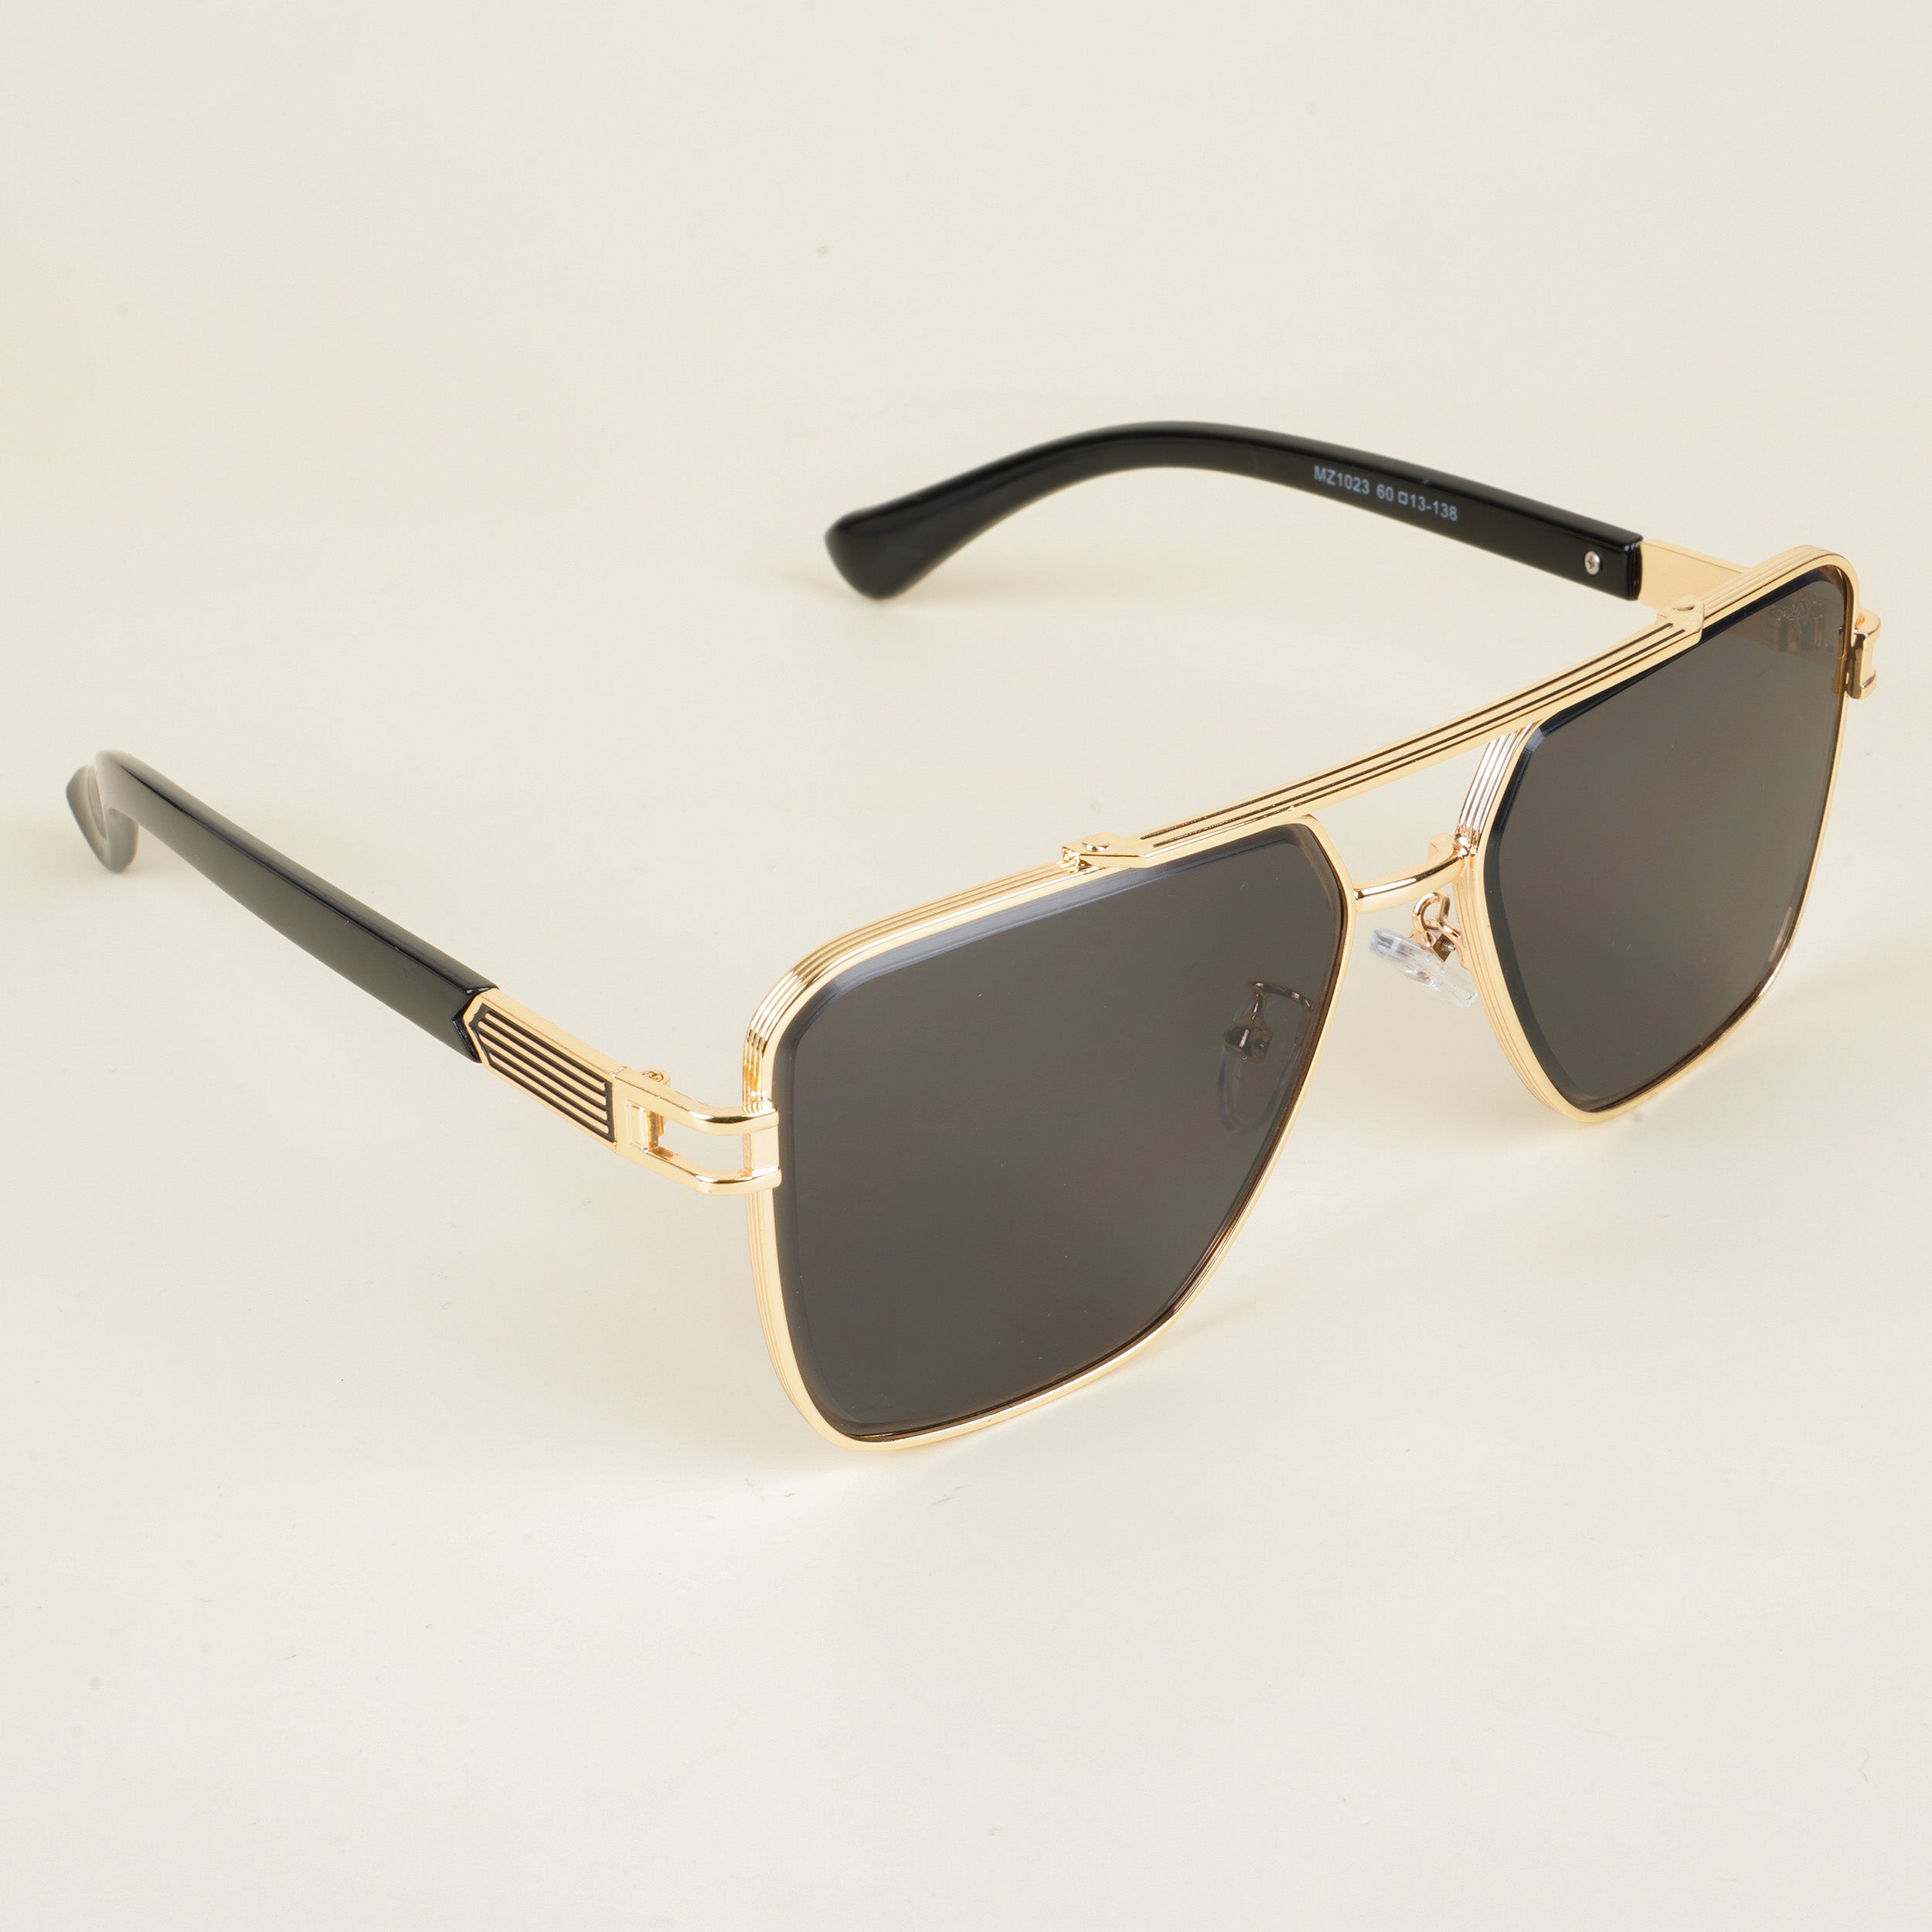 Voyage Wayfarer Sunglasses for Men & Women (Grey Lens | Golden Frame - MG5234)